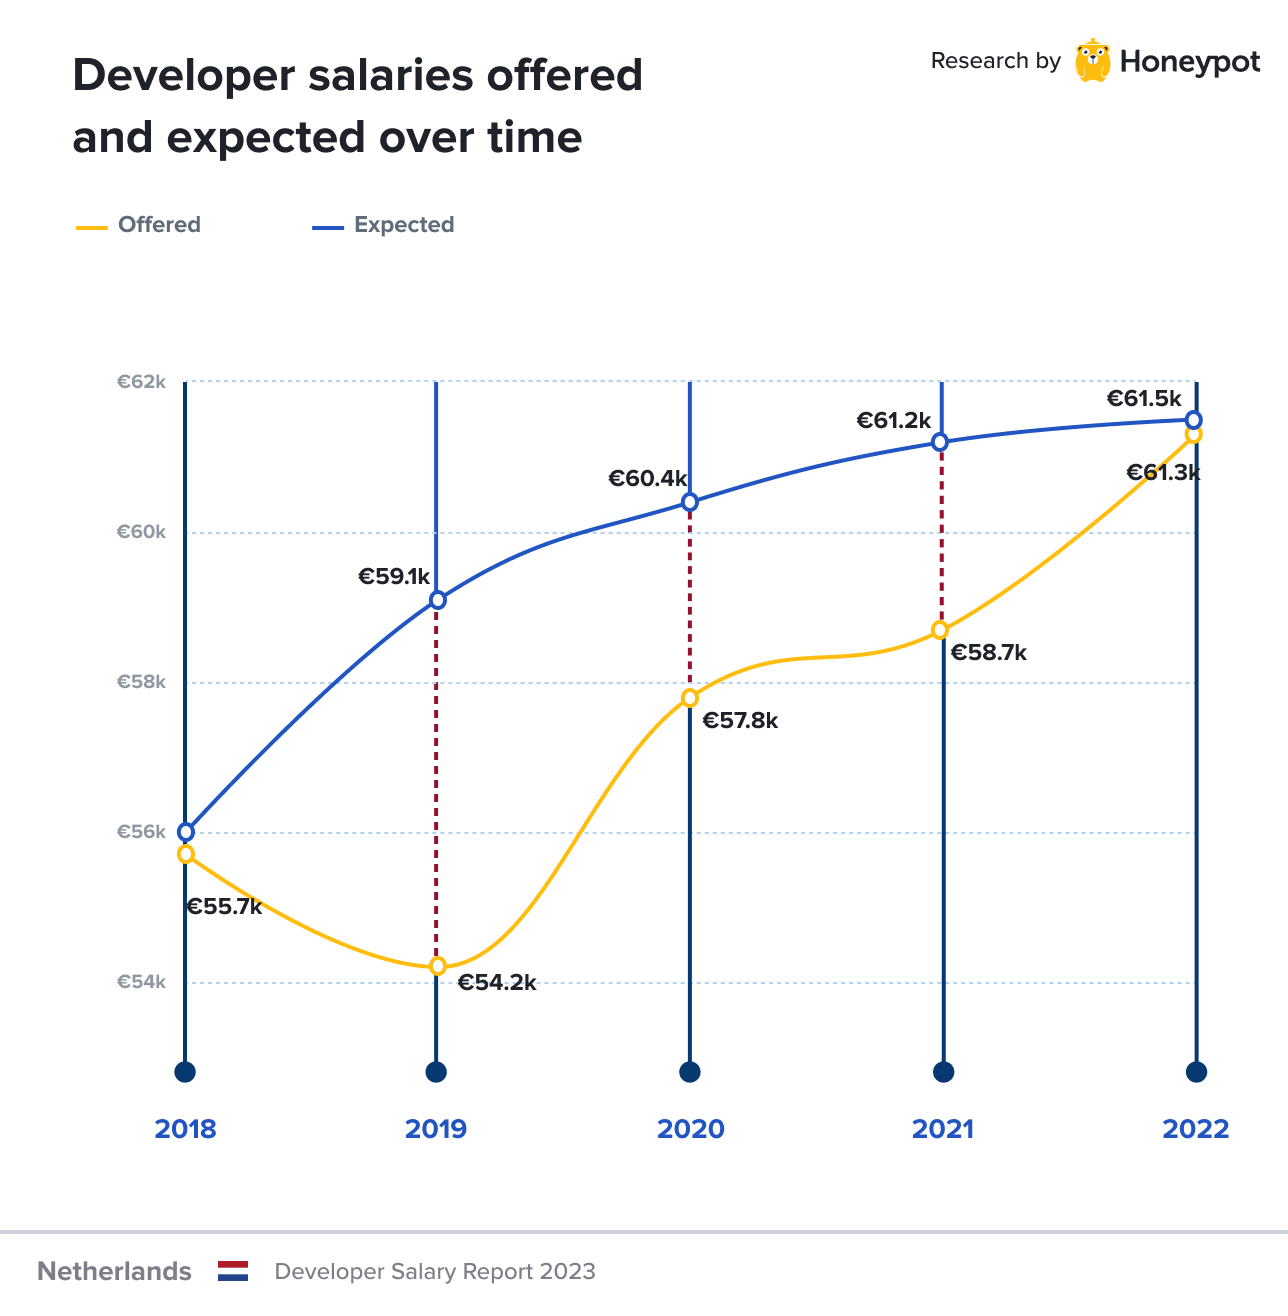 Netherlands – Developer salaries offered vs. expected over time